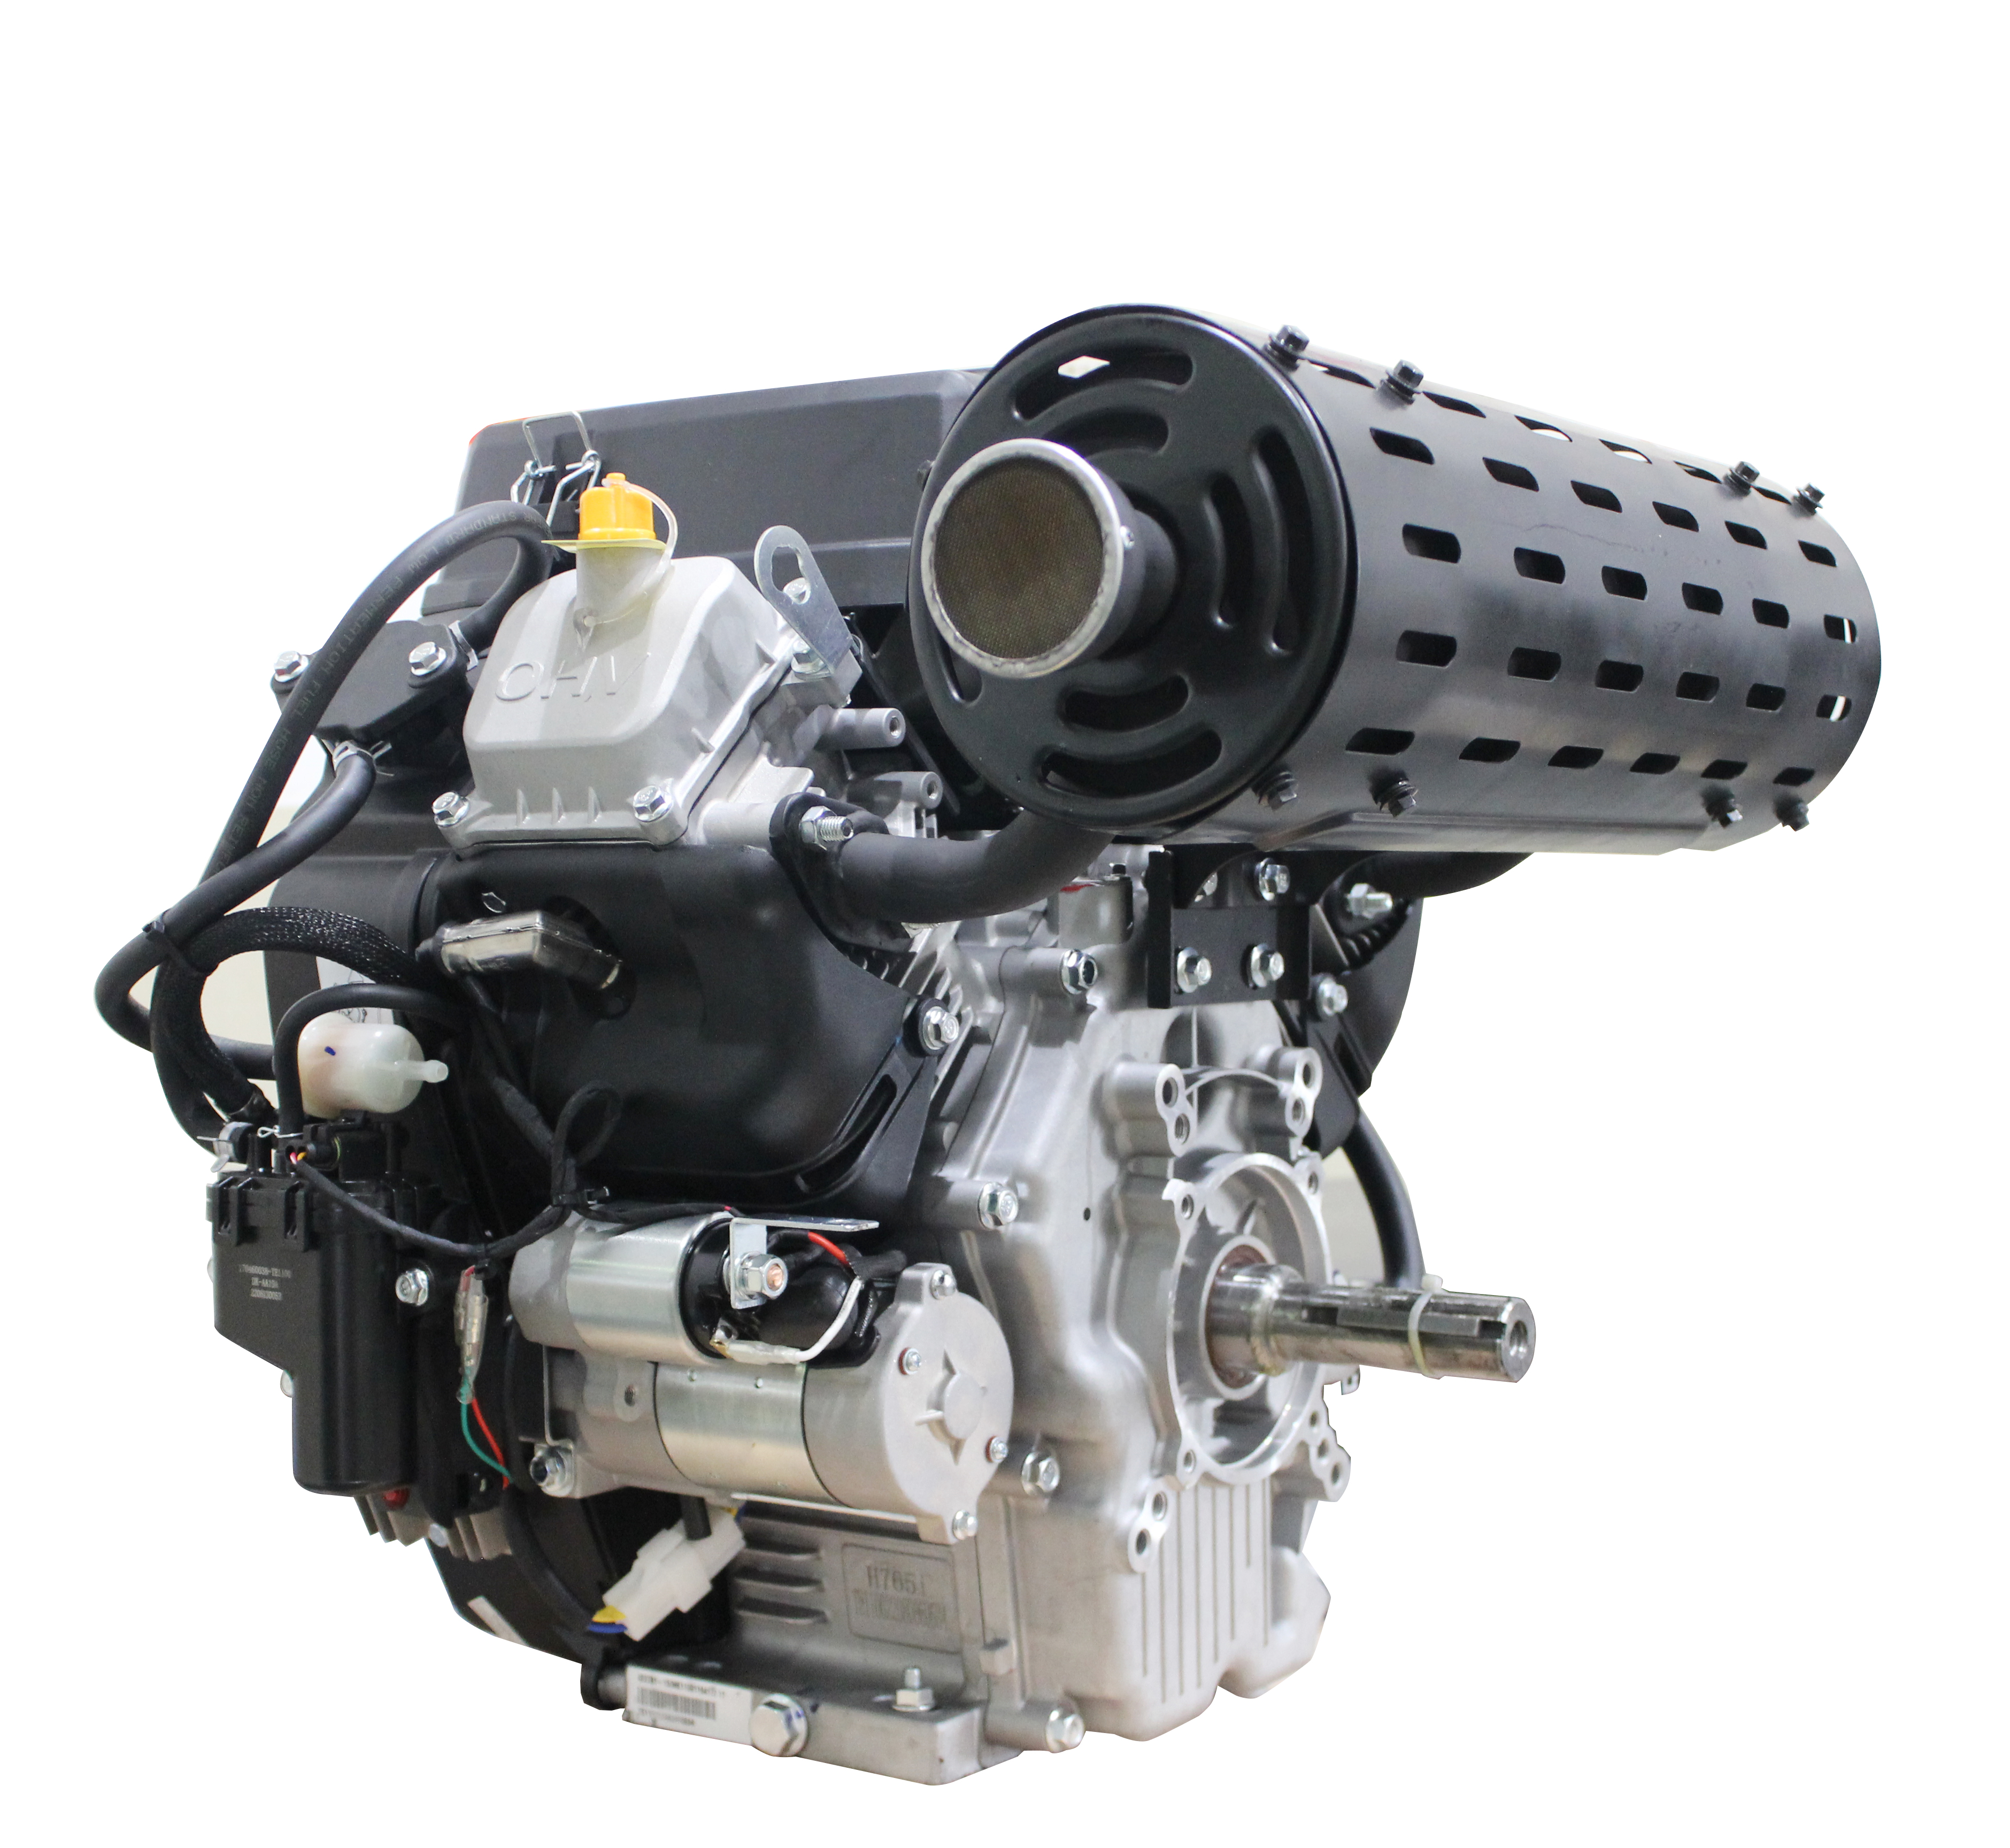 Fullas FP765i 27HP 764CC Gasoline V Twin Engine EPA/EURO-V